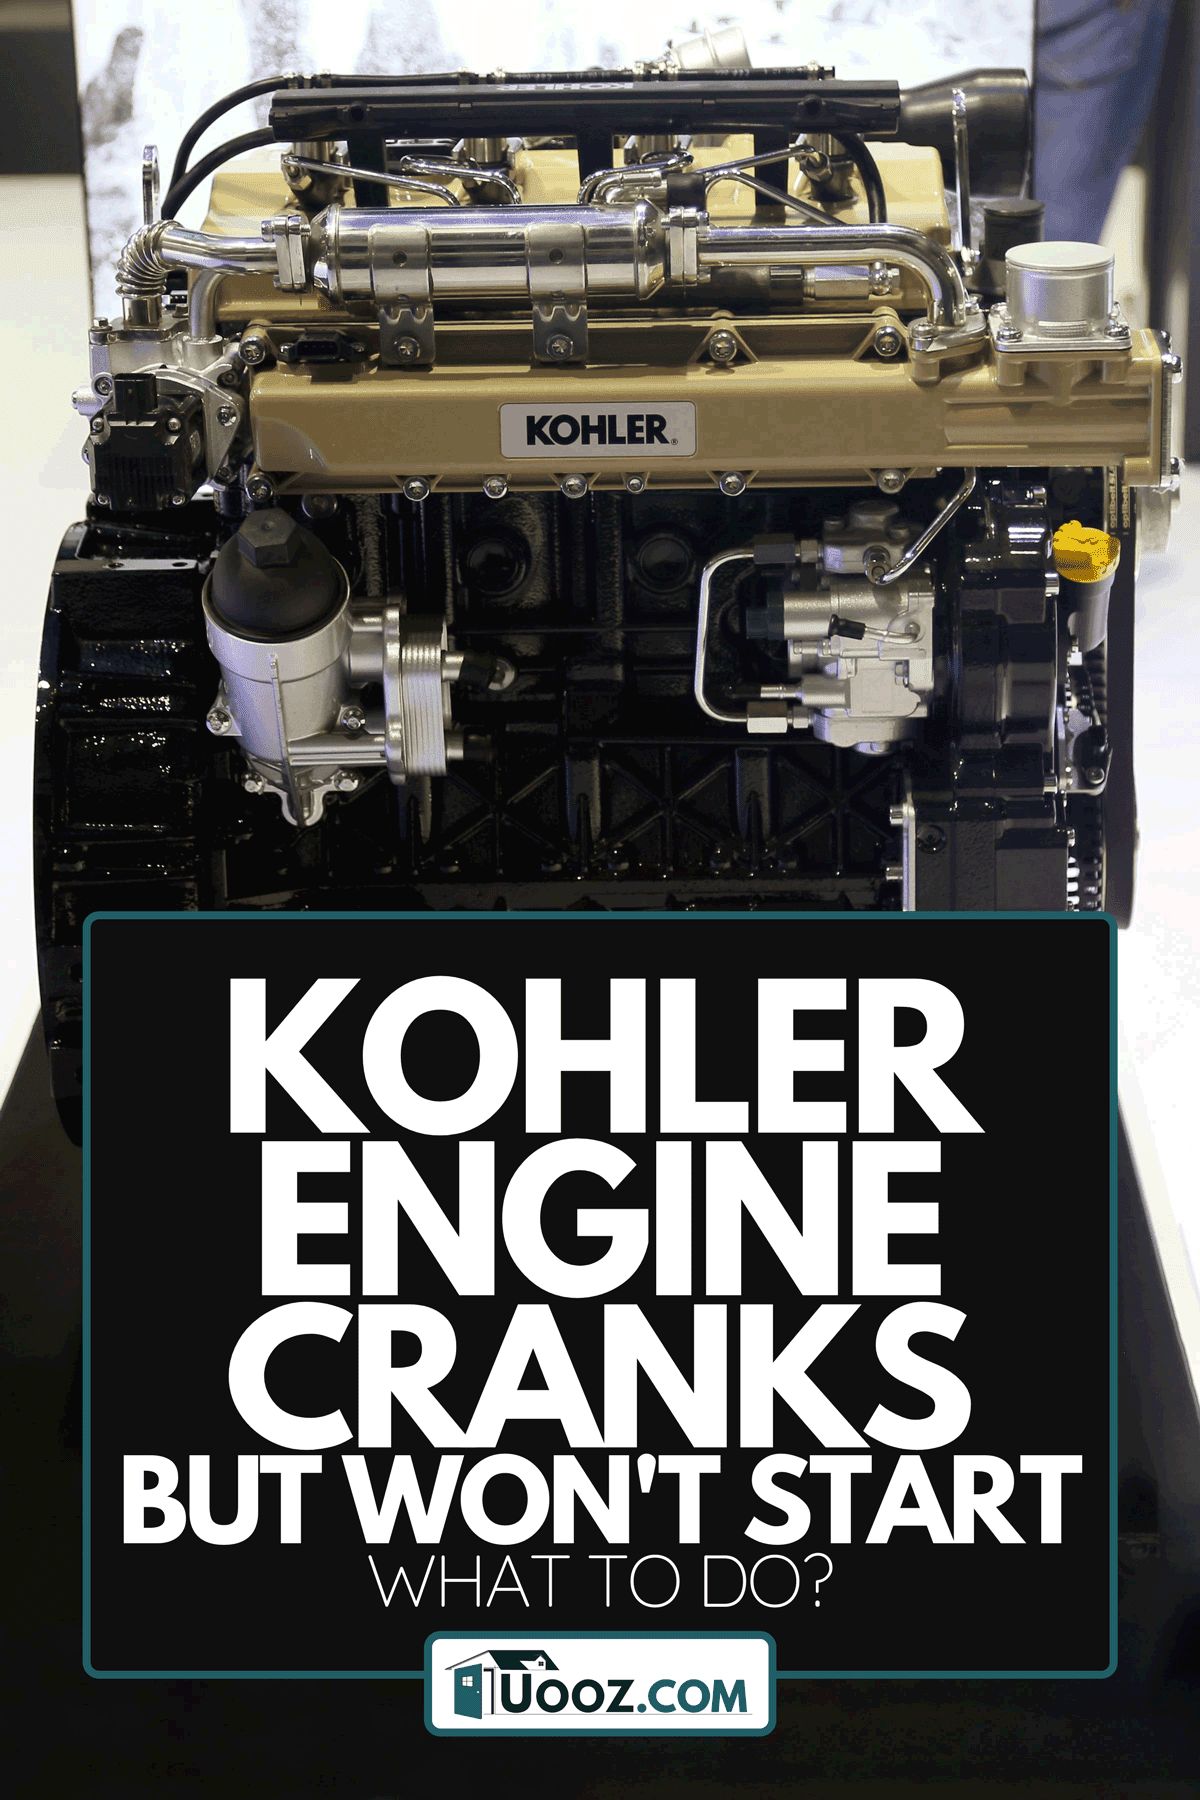 A Kohler engine displayed at store, Kohler Engine Cranks But Won't Start - What To Do?